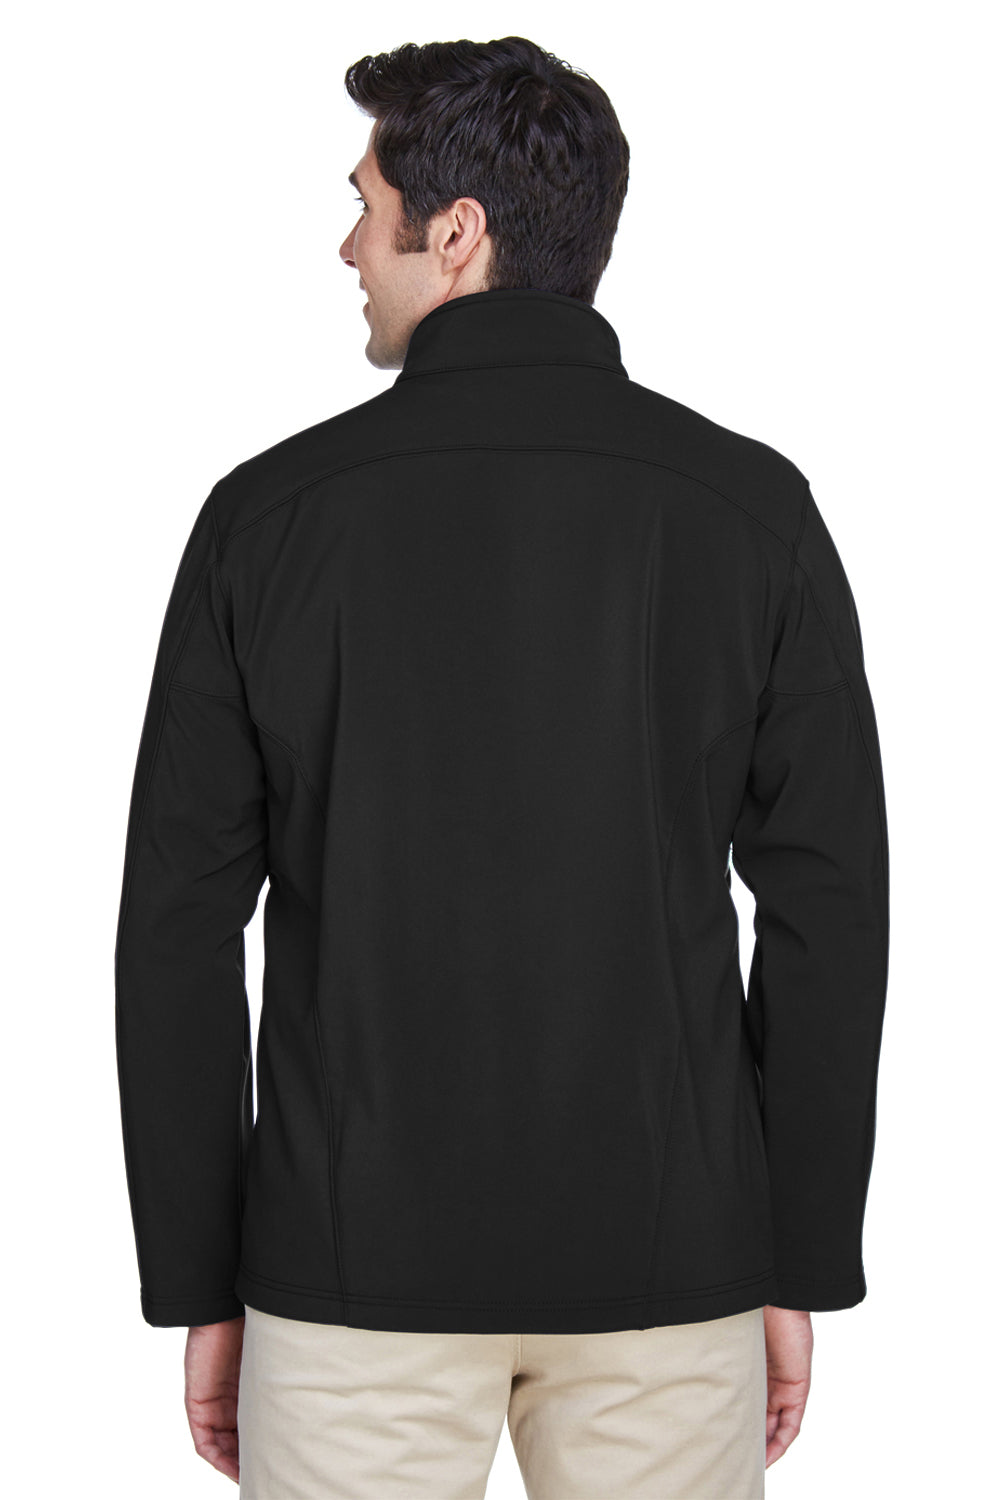 Core 365 88184 Mens Cruise Water Resistant Full Zip Jacket Black Back